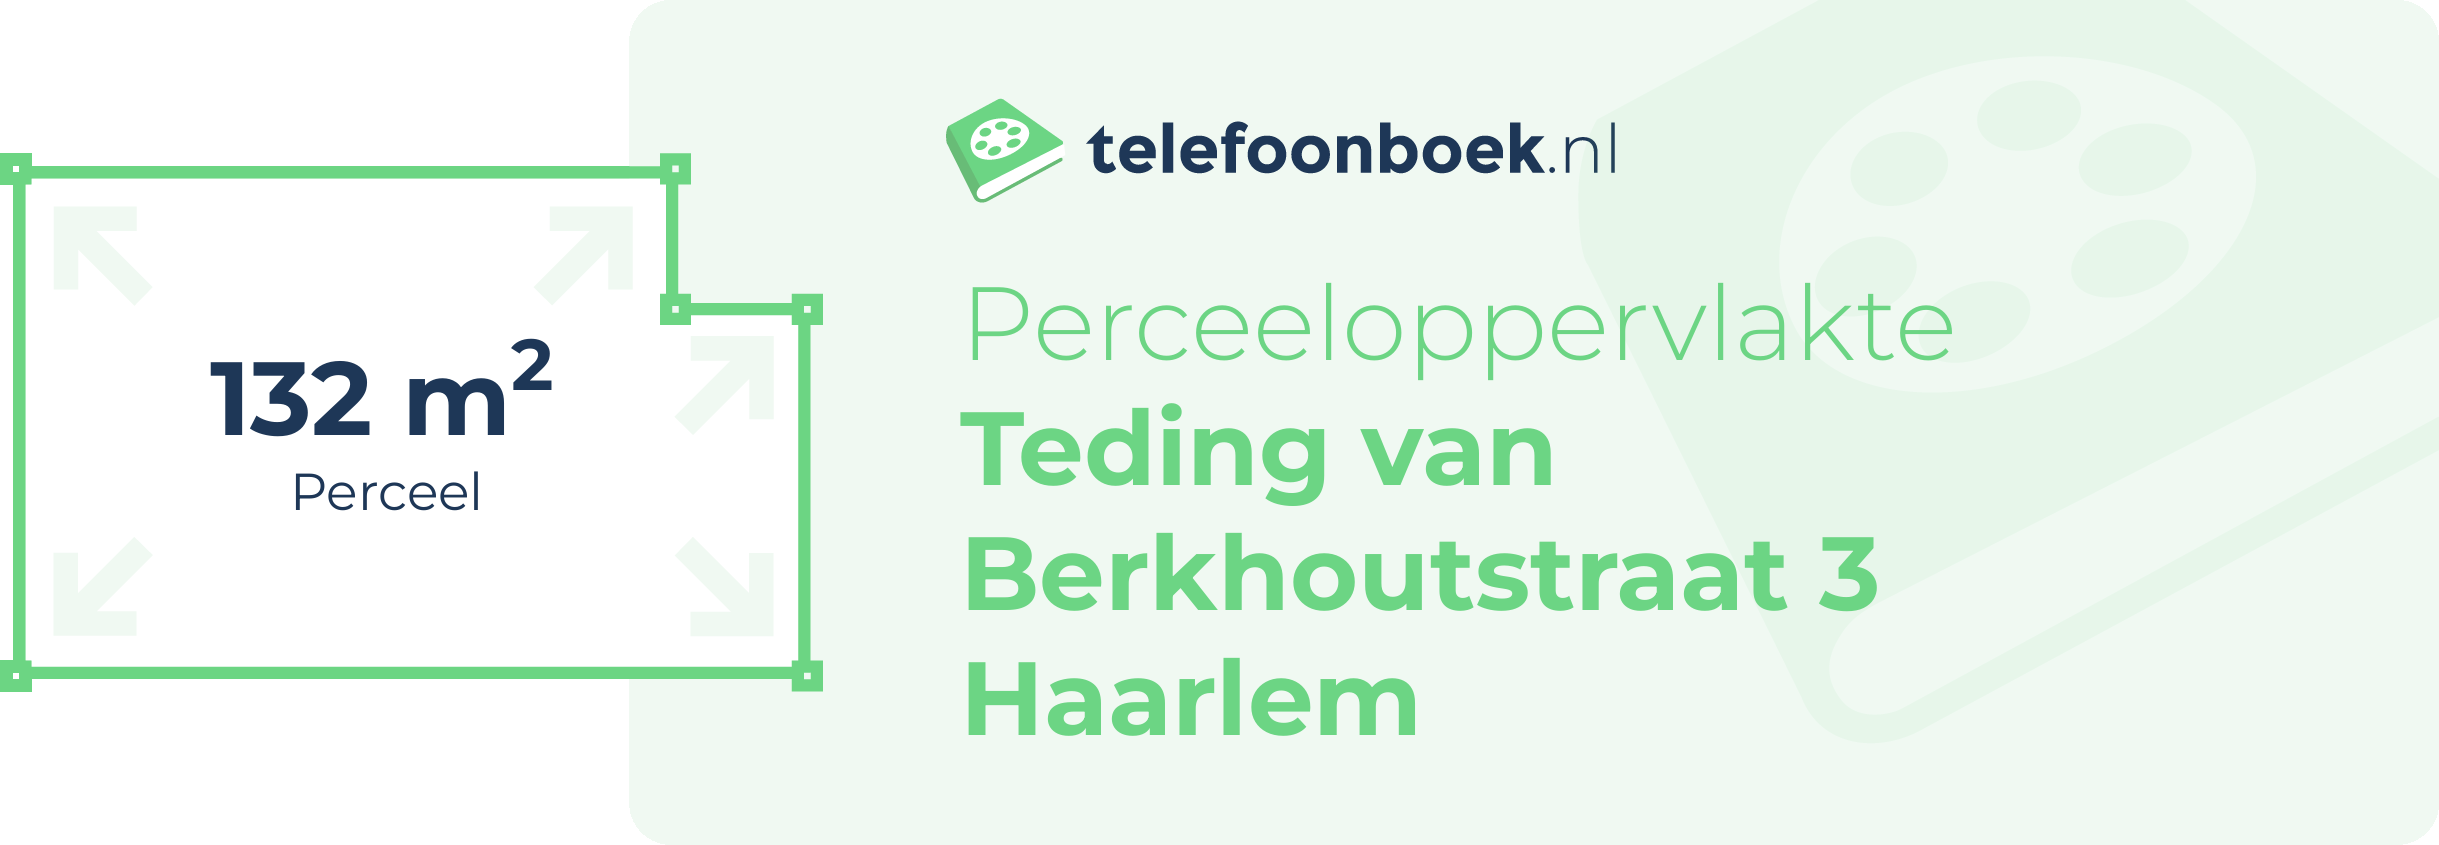 Perceeloppervlakte Teding Van Berkhoutstraat 3 Haarlem